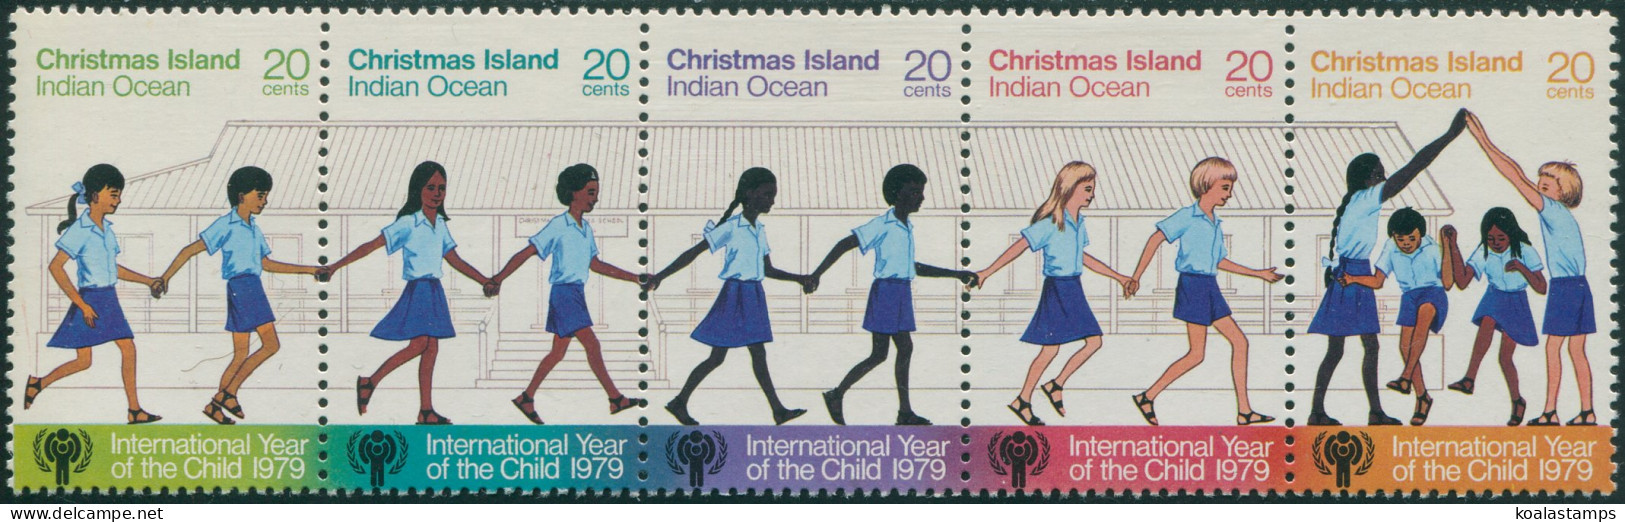 Christmas Island 1979 SG108a International Year Child Strip MNH - Christmas Island